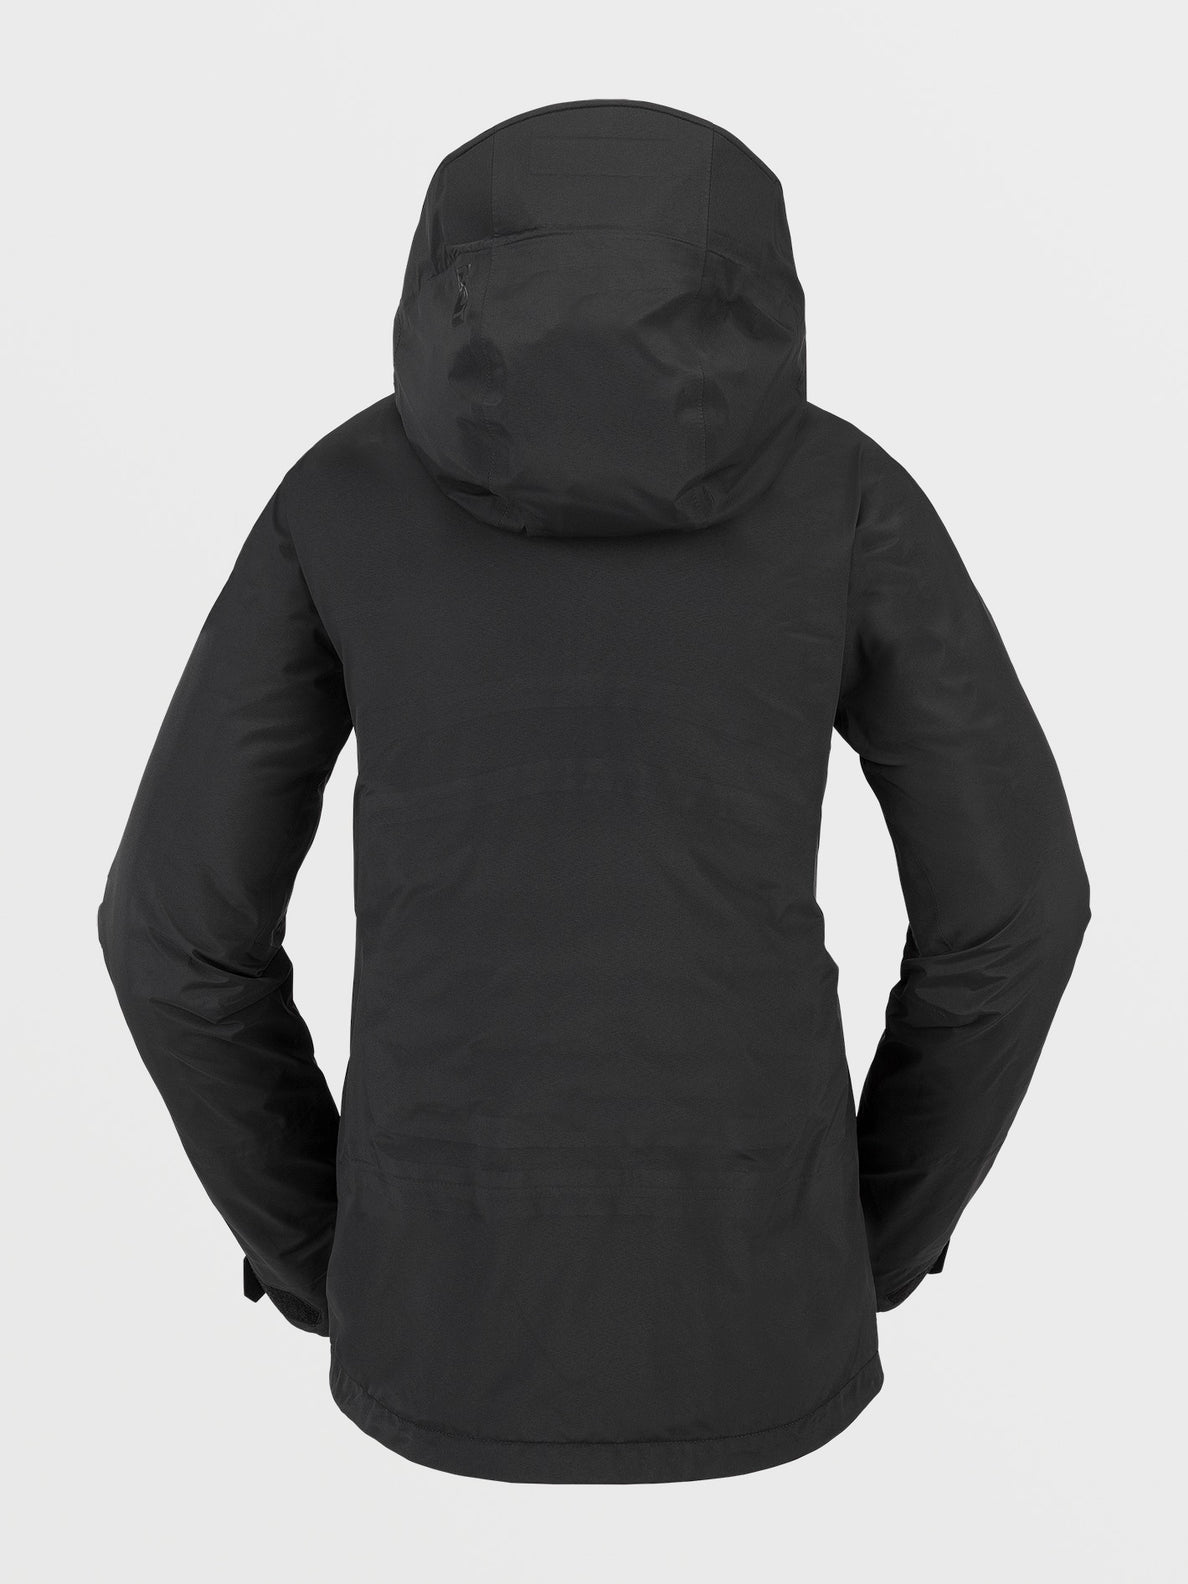 Womens Koa Tds Infrared Gore-Tex Jacket - Black (H0452400_BLK) [B]